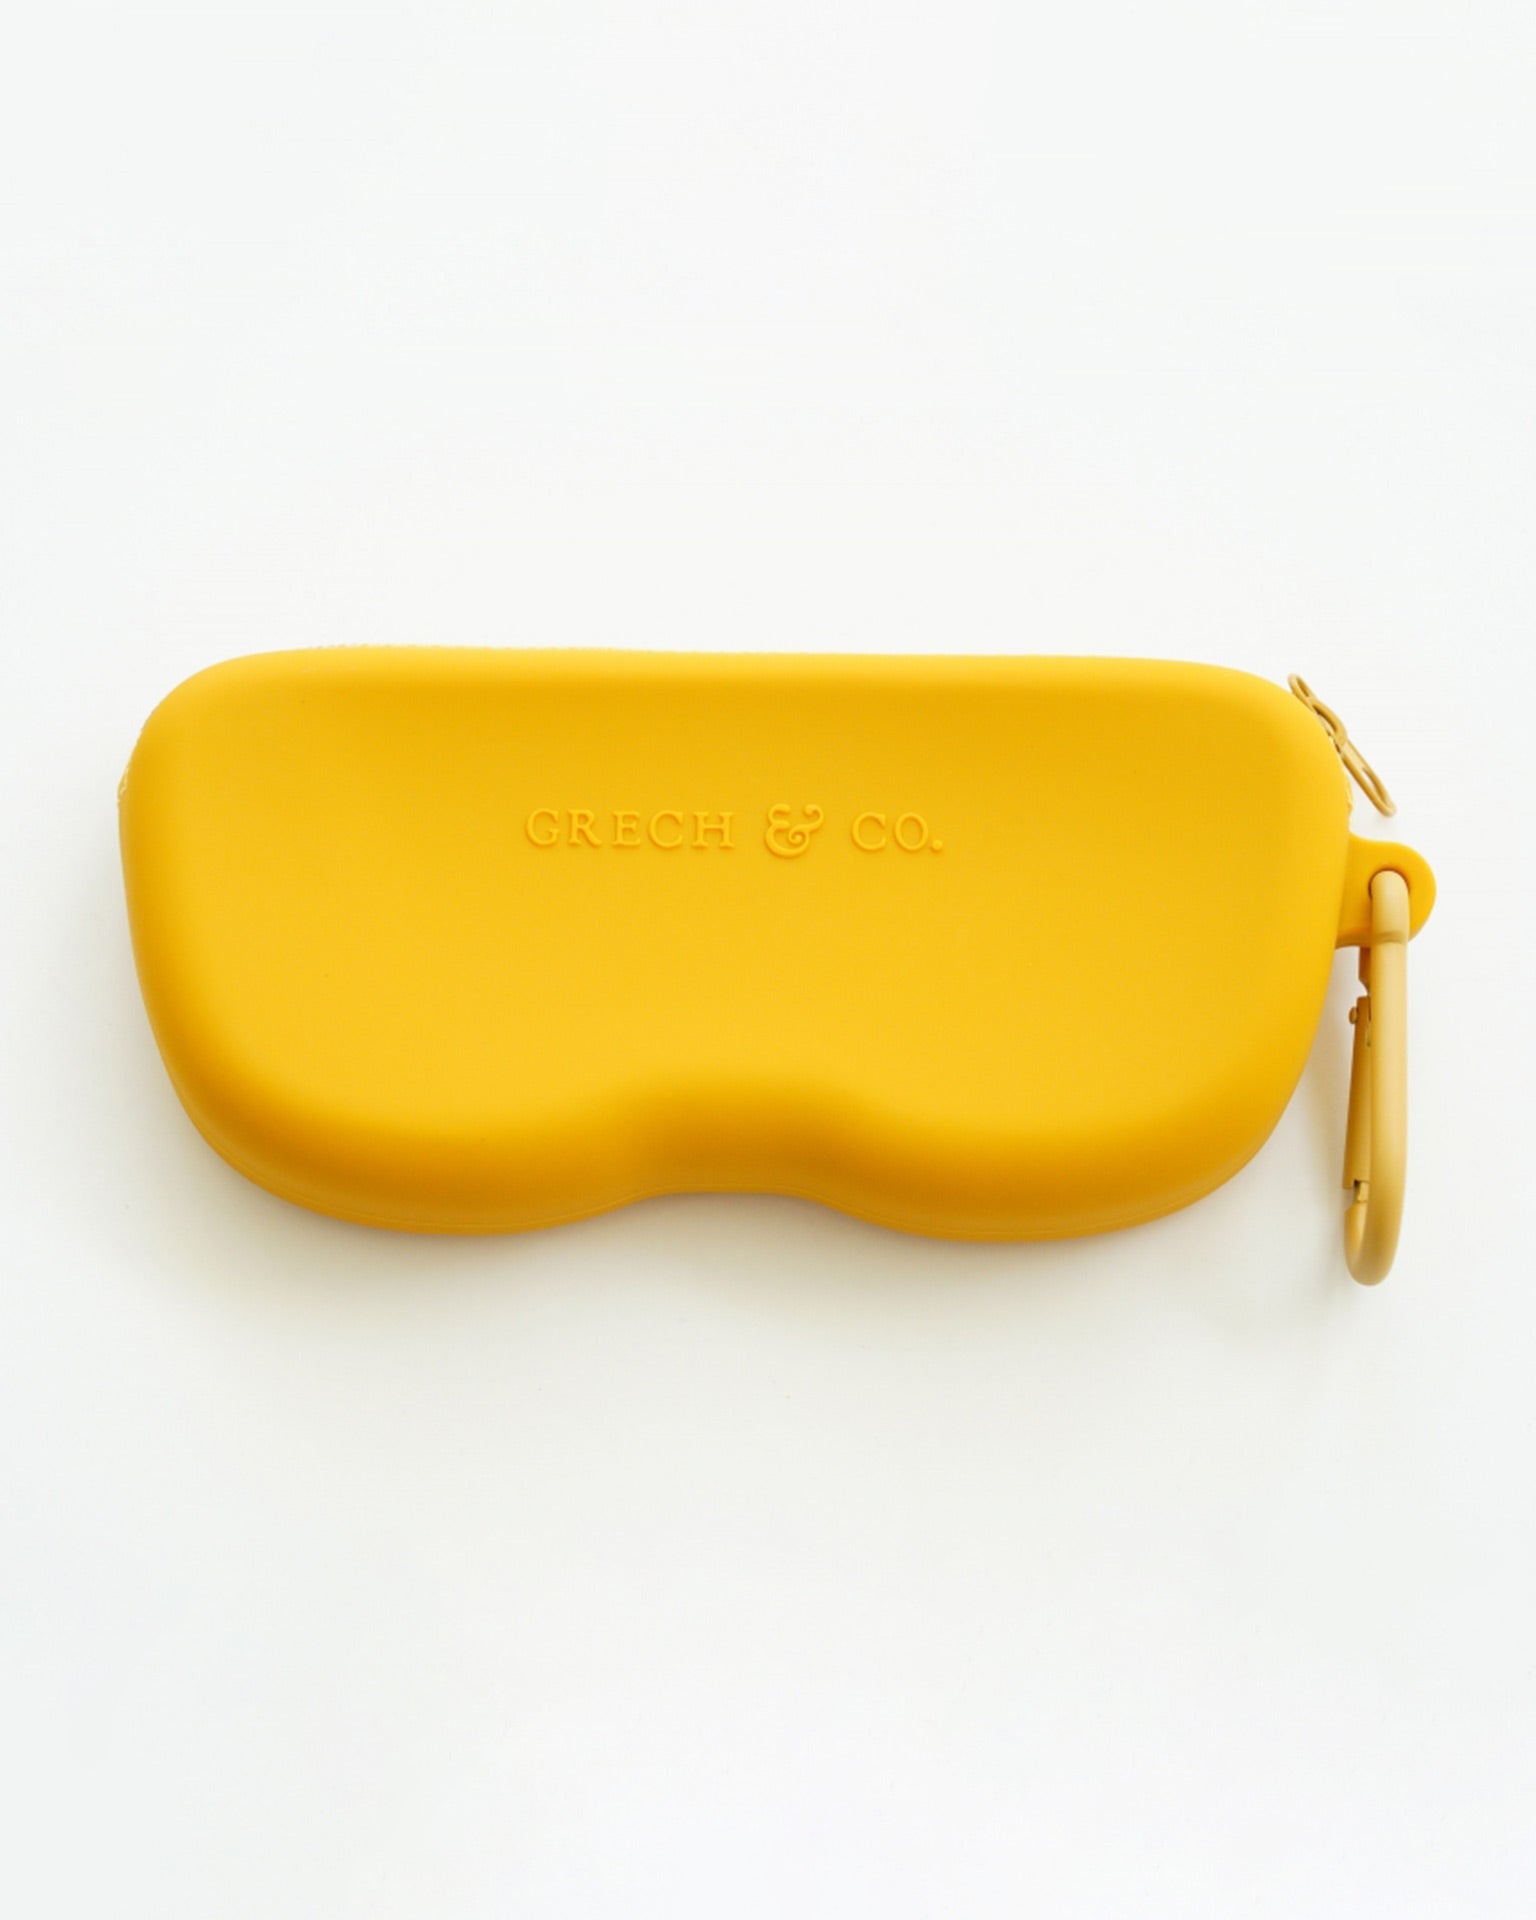 Little grech + co accessories sunglasses case in golden